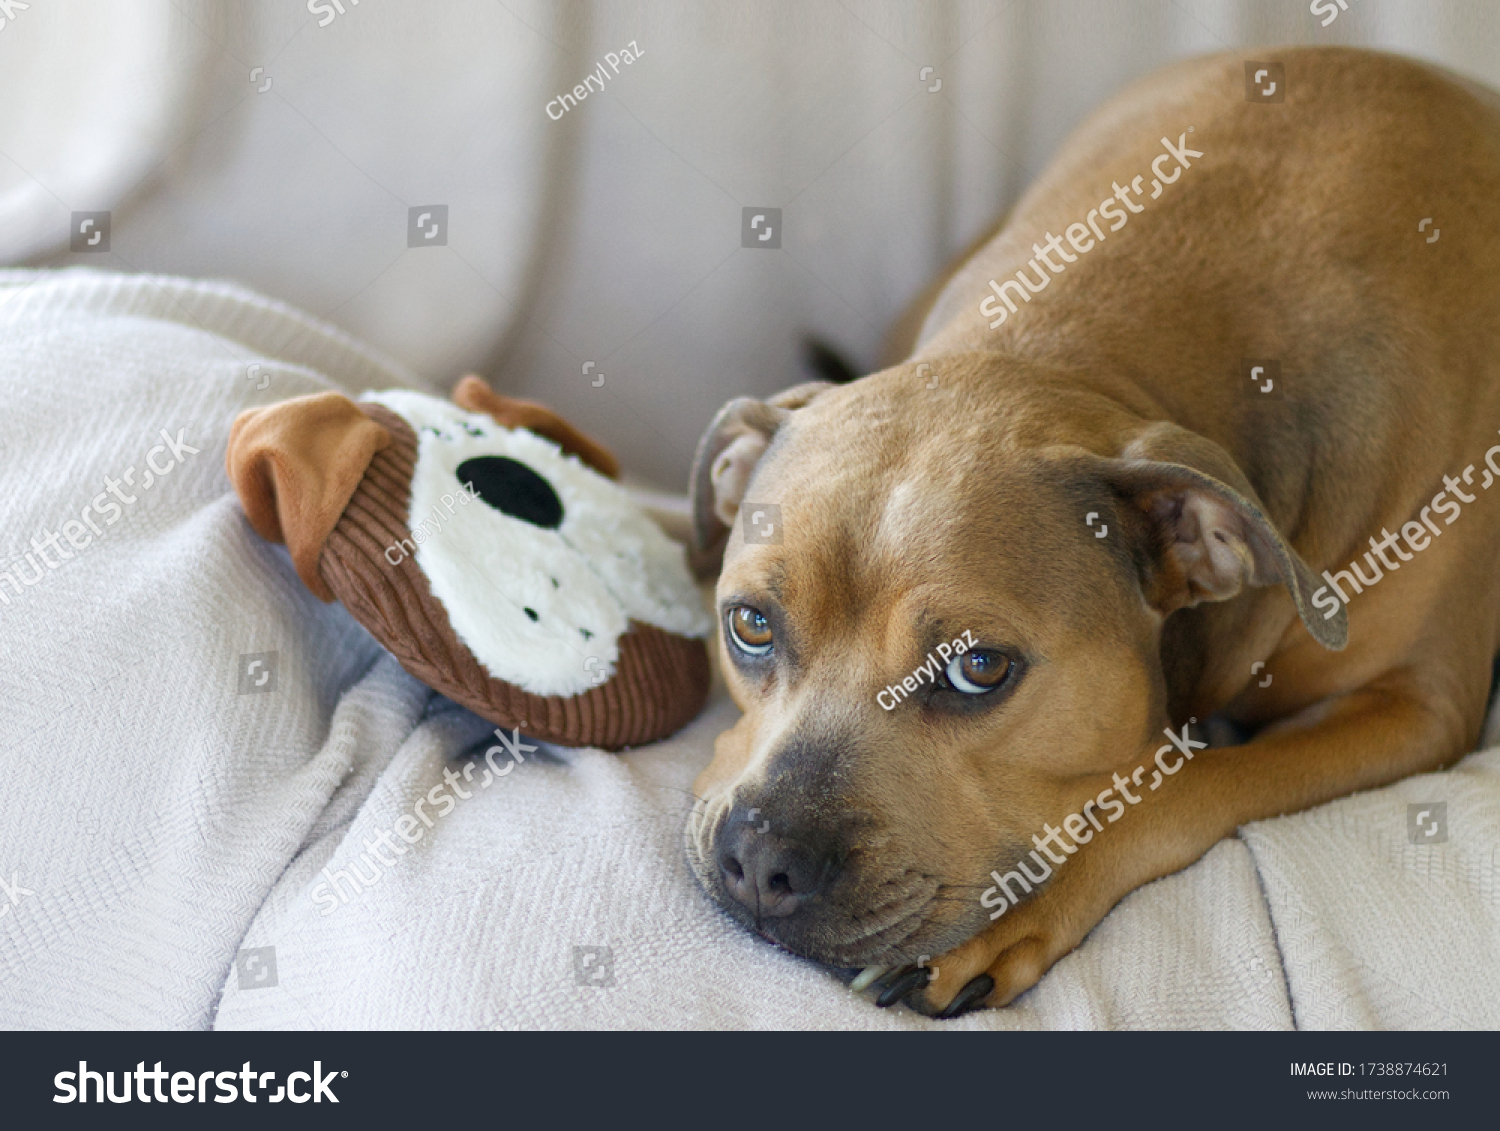 Sad Brown Pitbull Dog with Favorite Dog Toy #1738874621